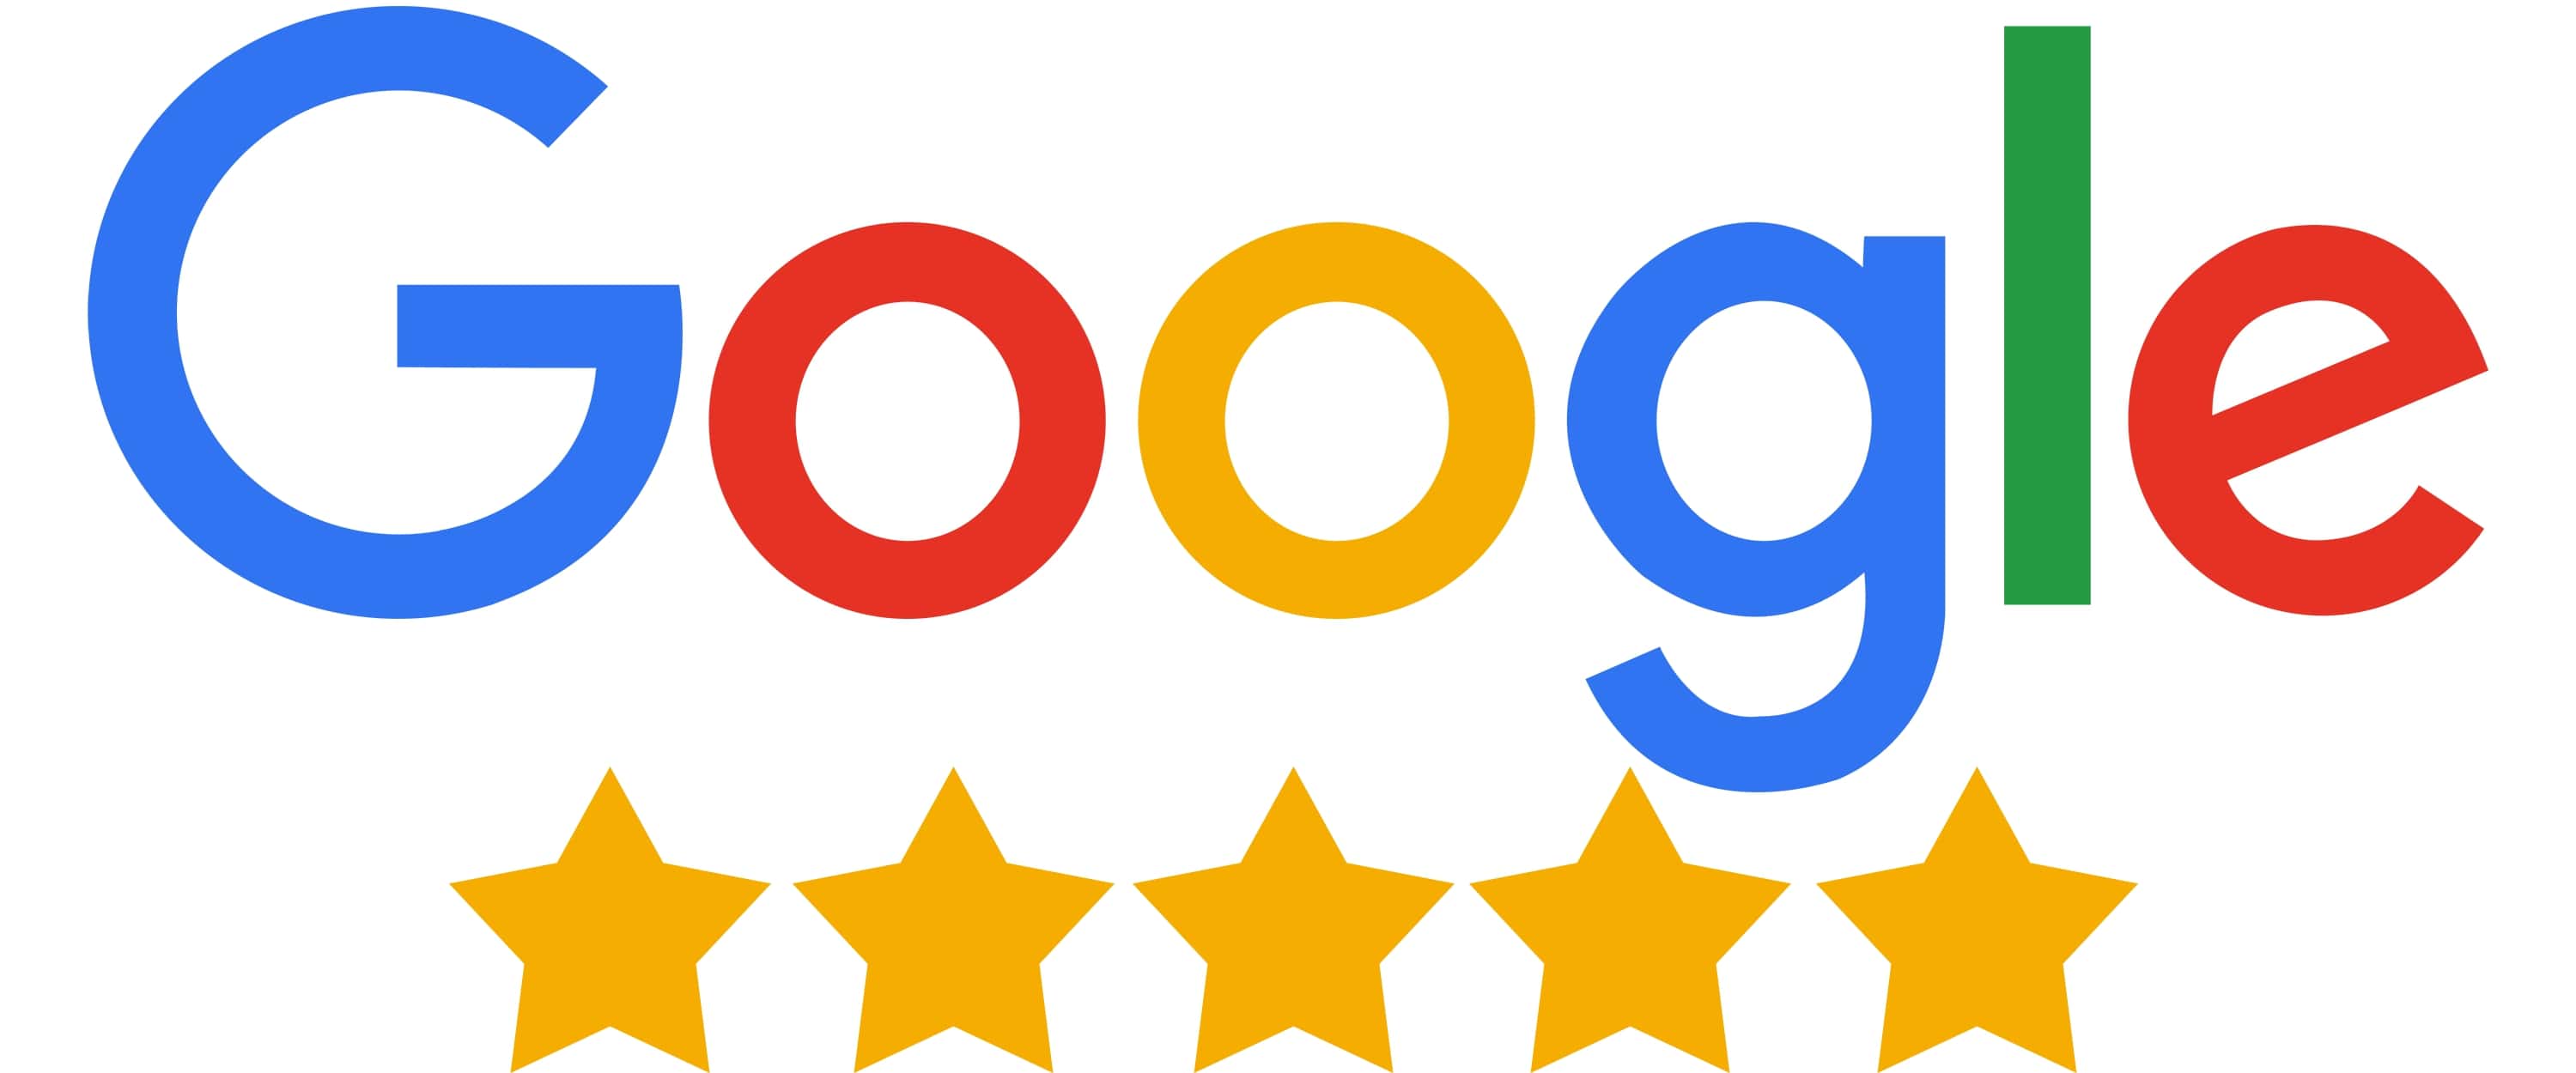 Google 5 star reviewed company badge